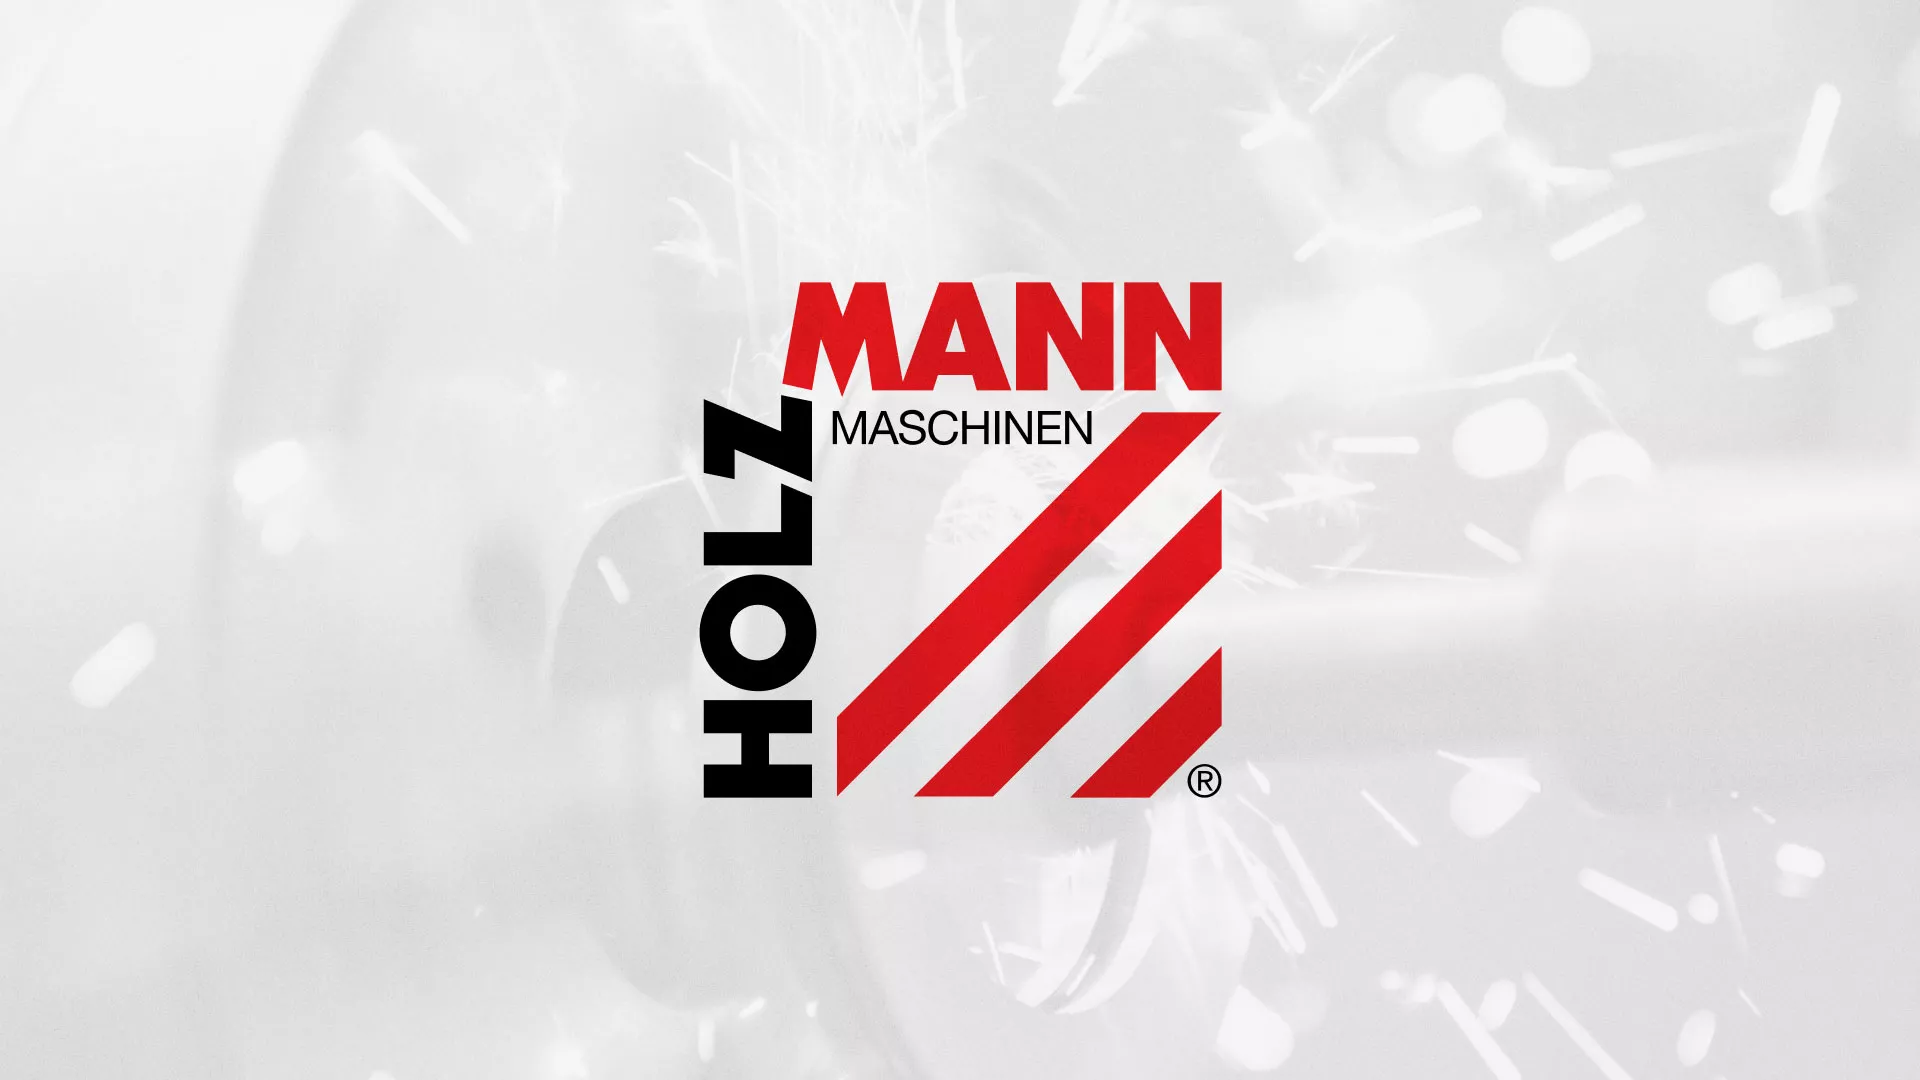 Создание сайта компании «HOLZMANN Maschinen GmbH» в Бугуруслане